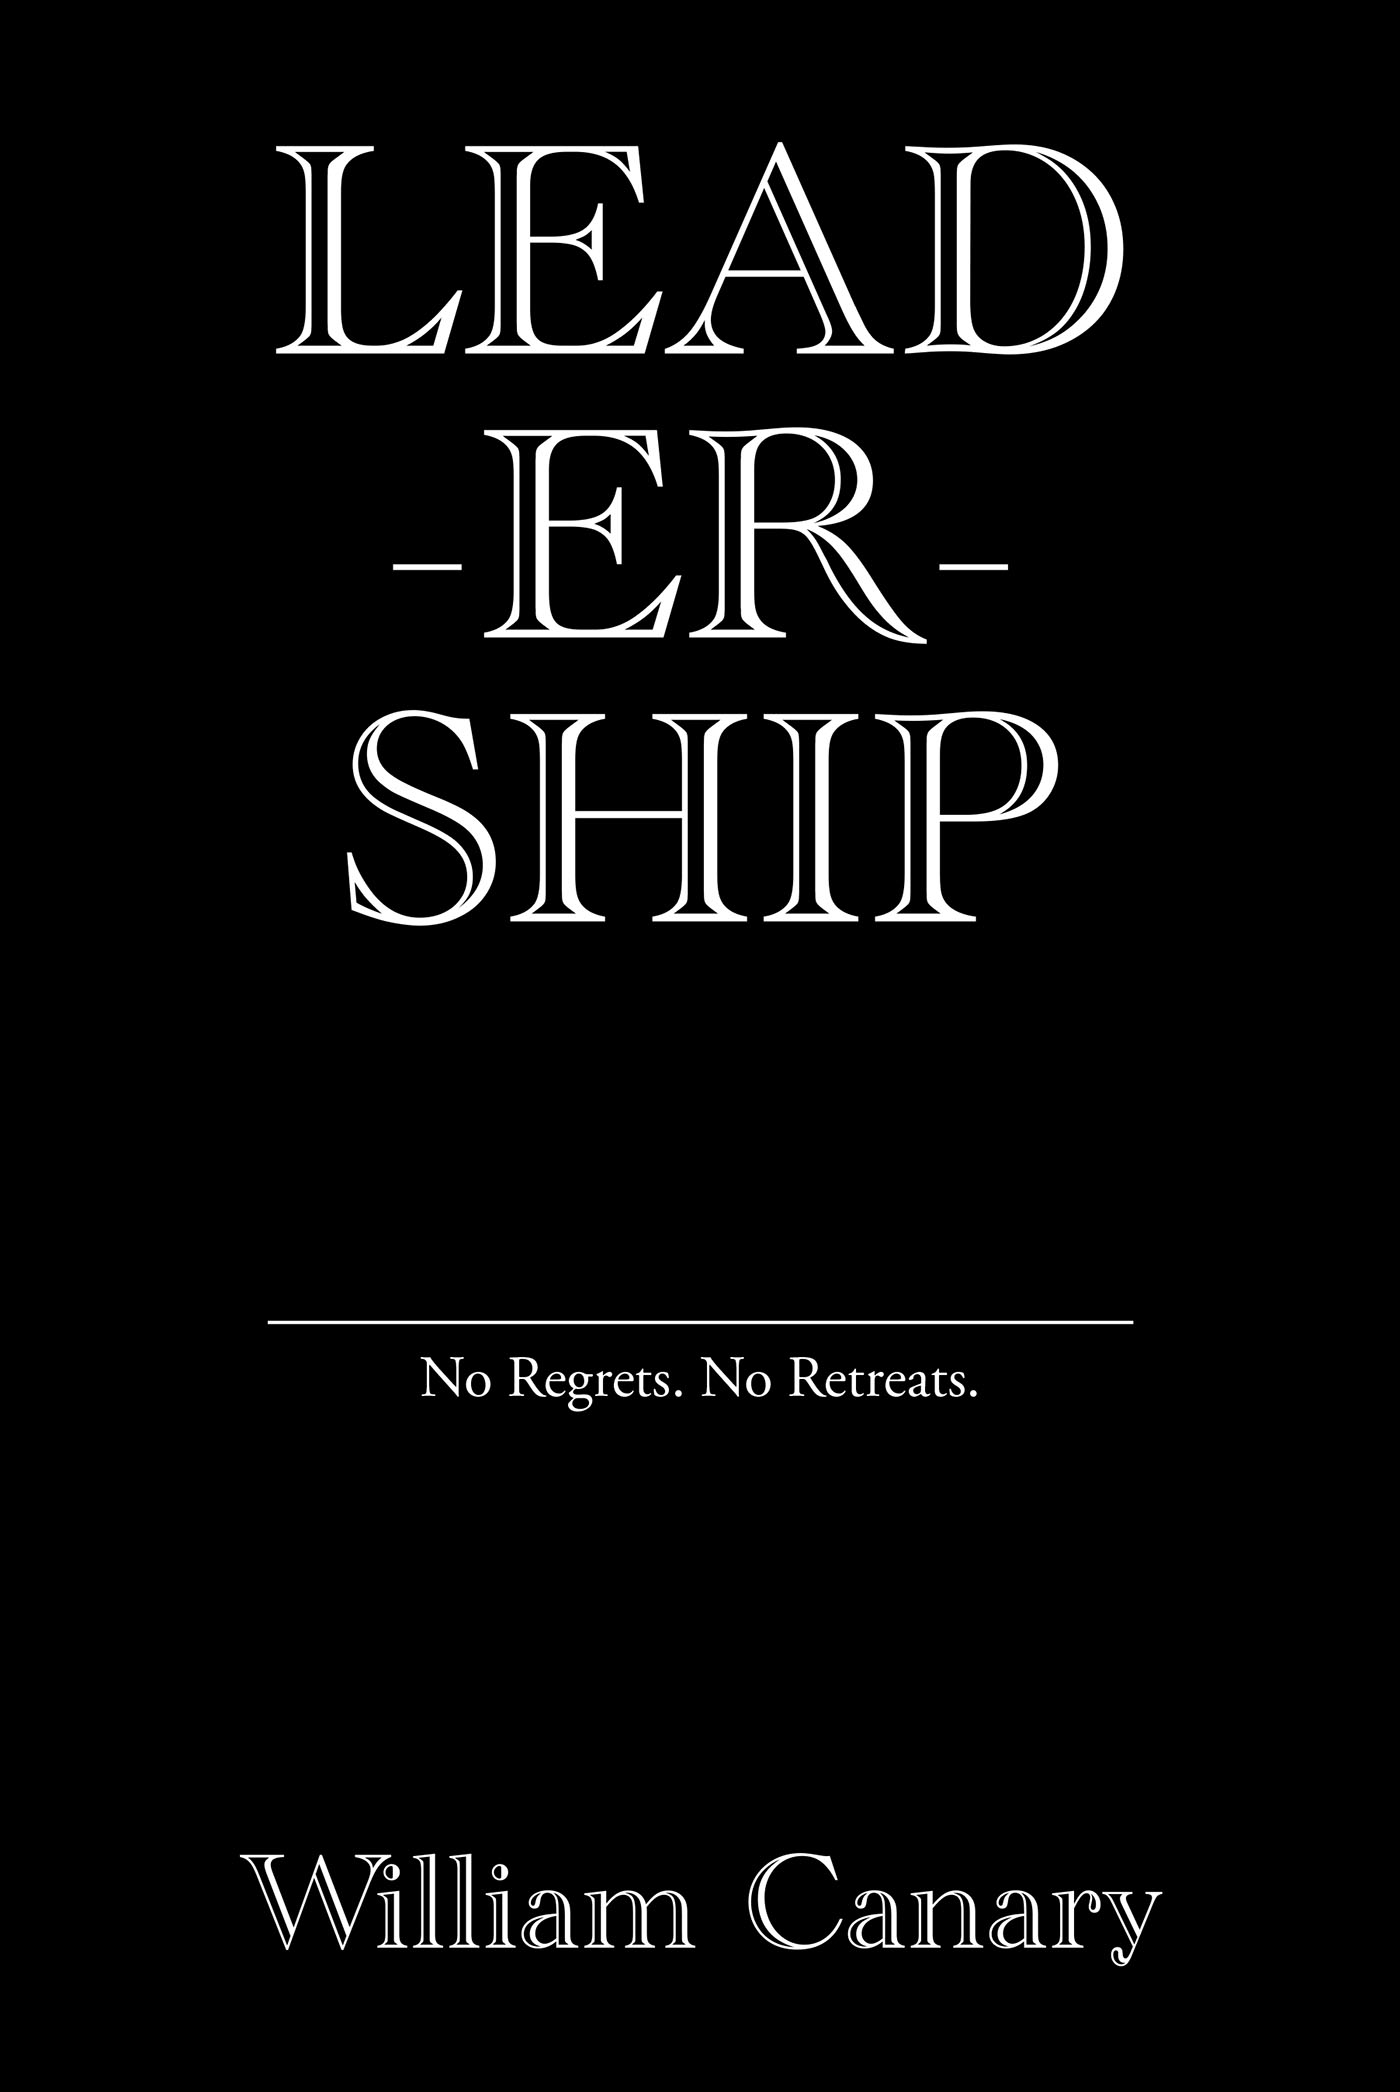 LEAD-ER-SHIP Cover Image